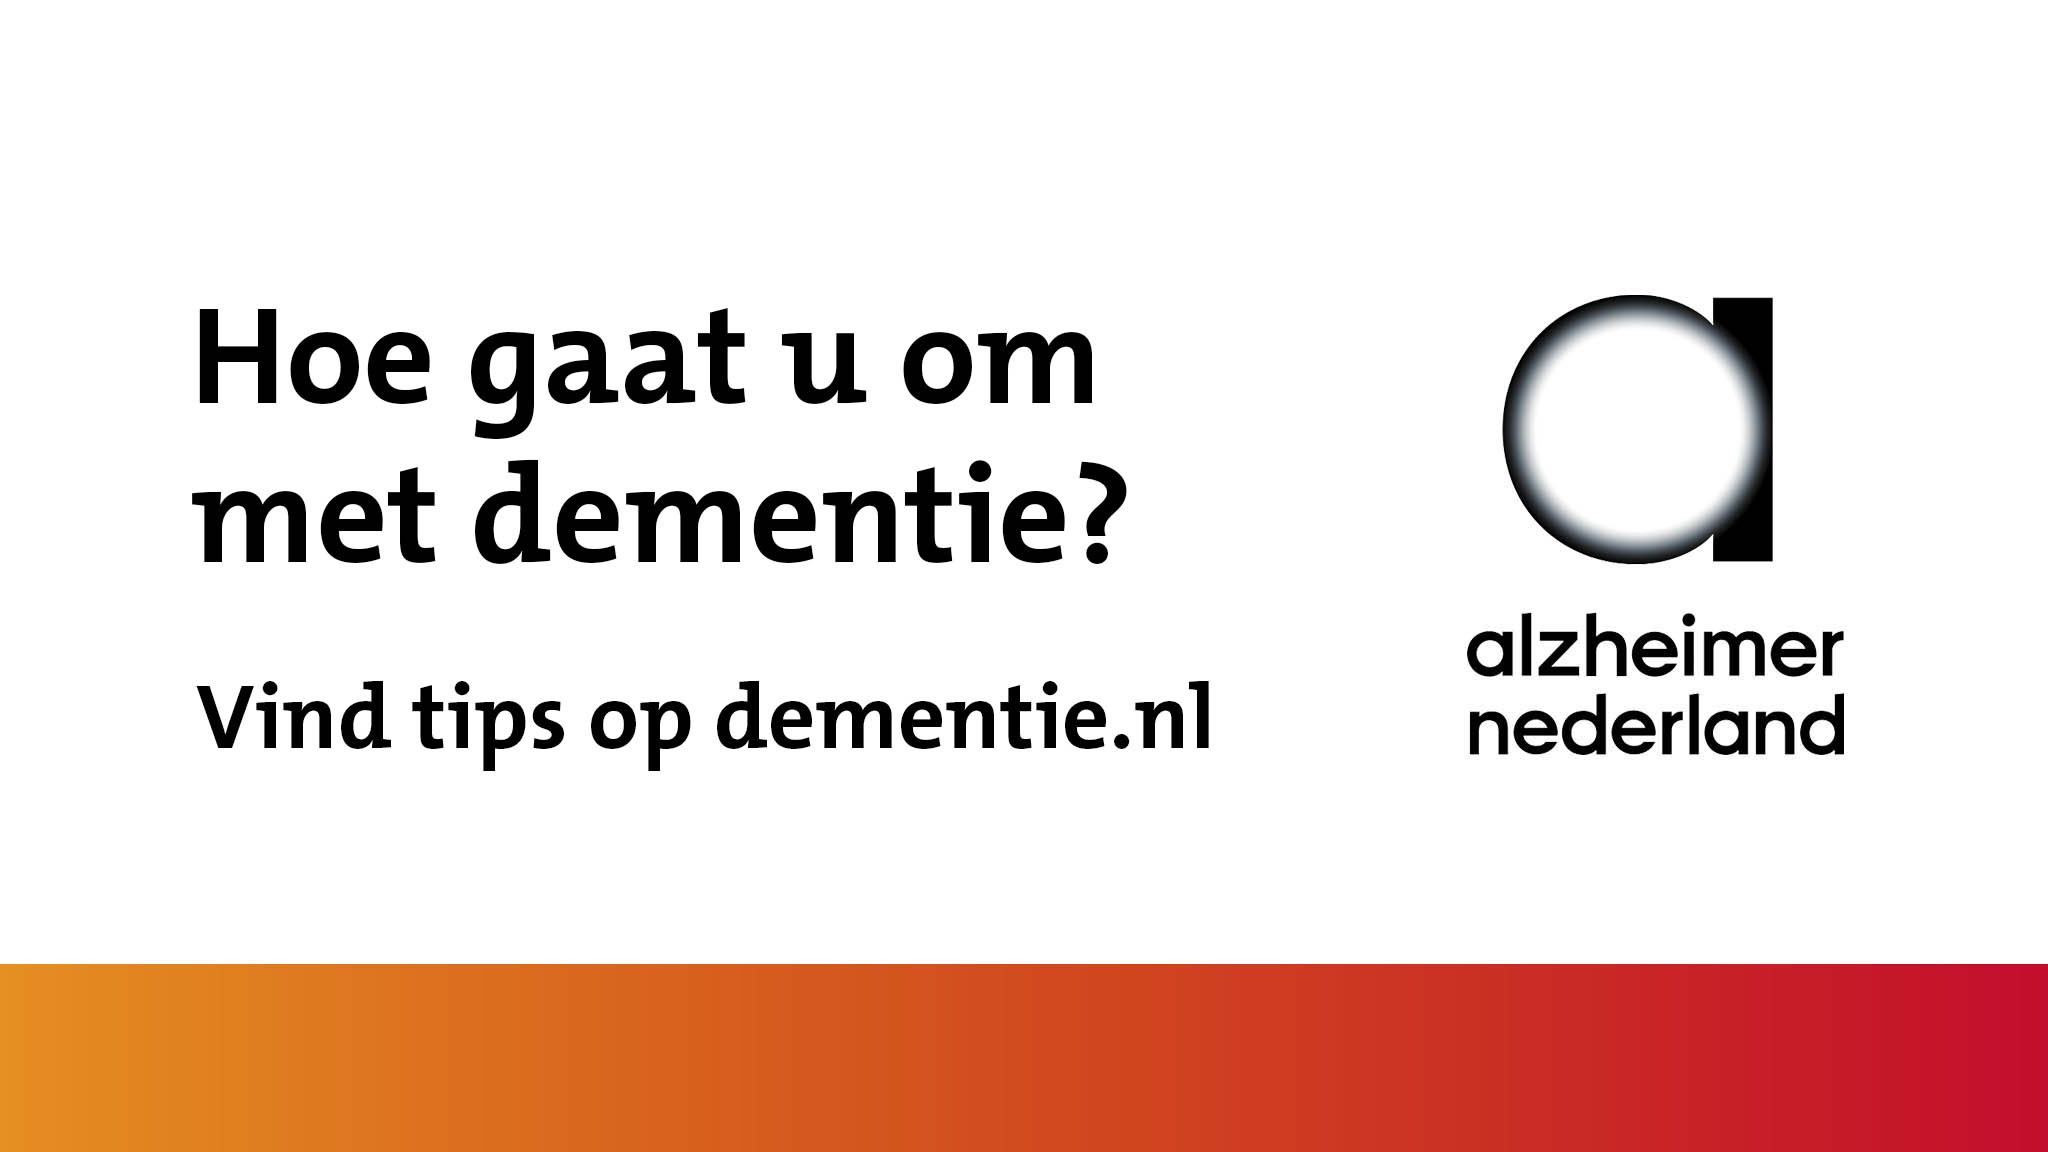 Dementie.nl